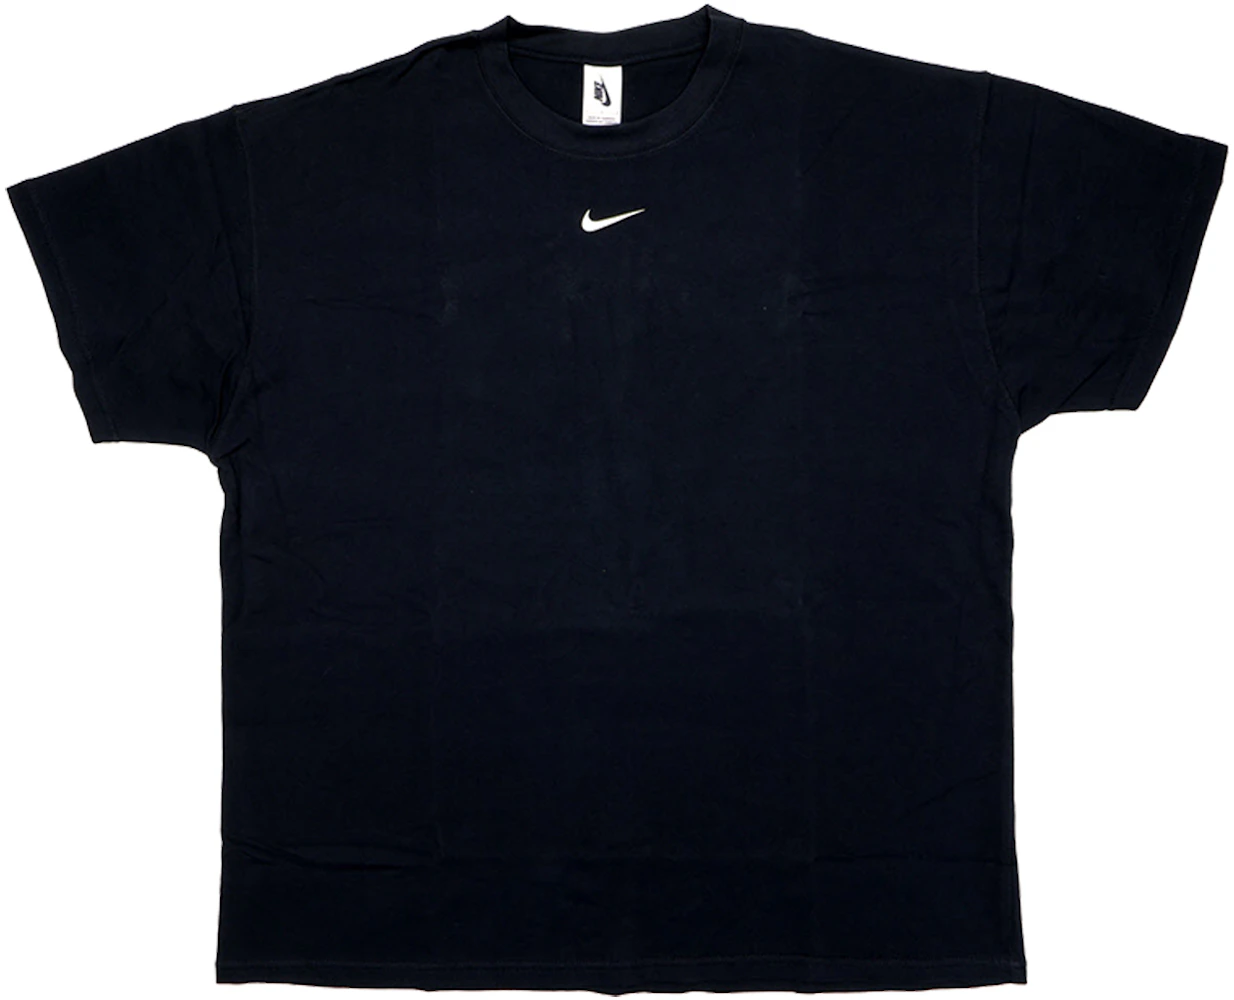 FEAR GOD Nike Air of God T-Shirt Black - FW19 - US